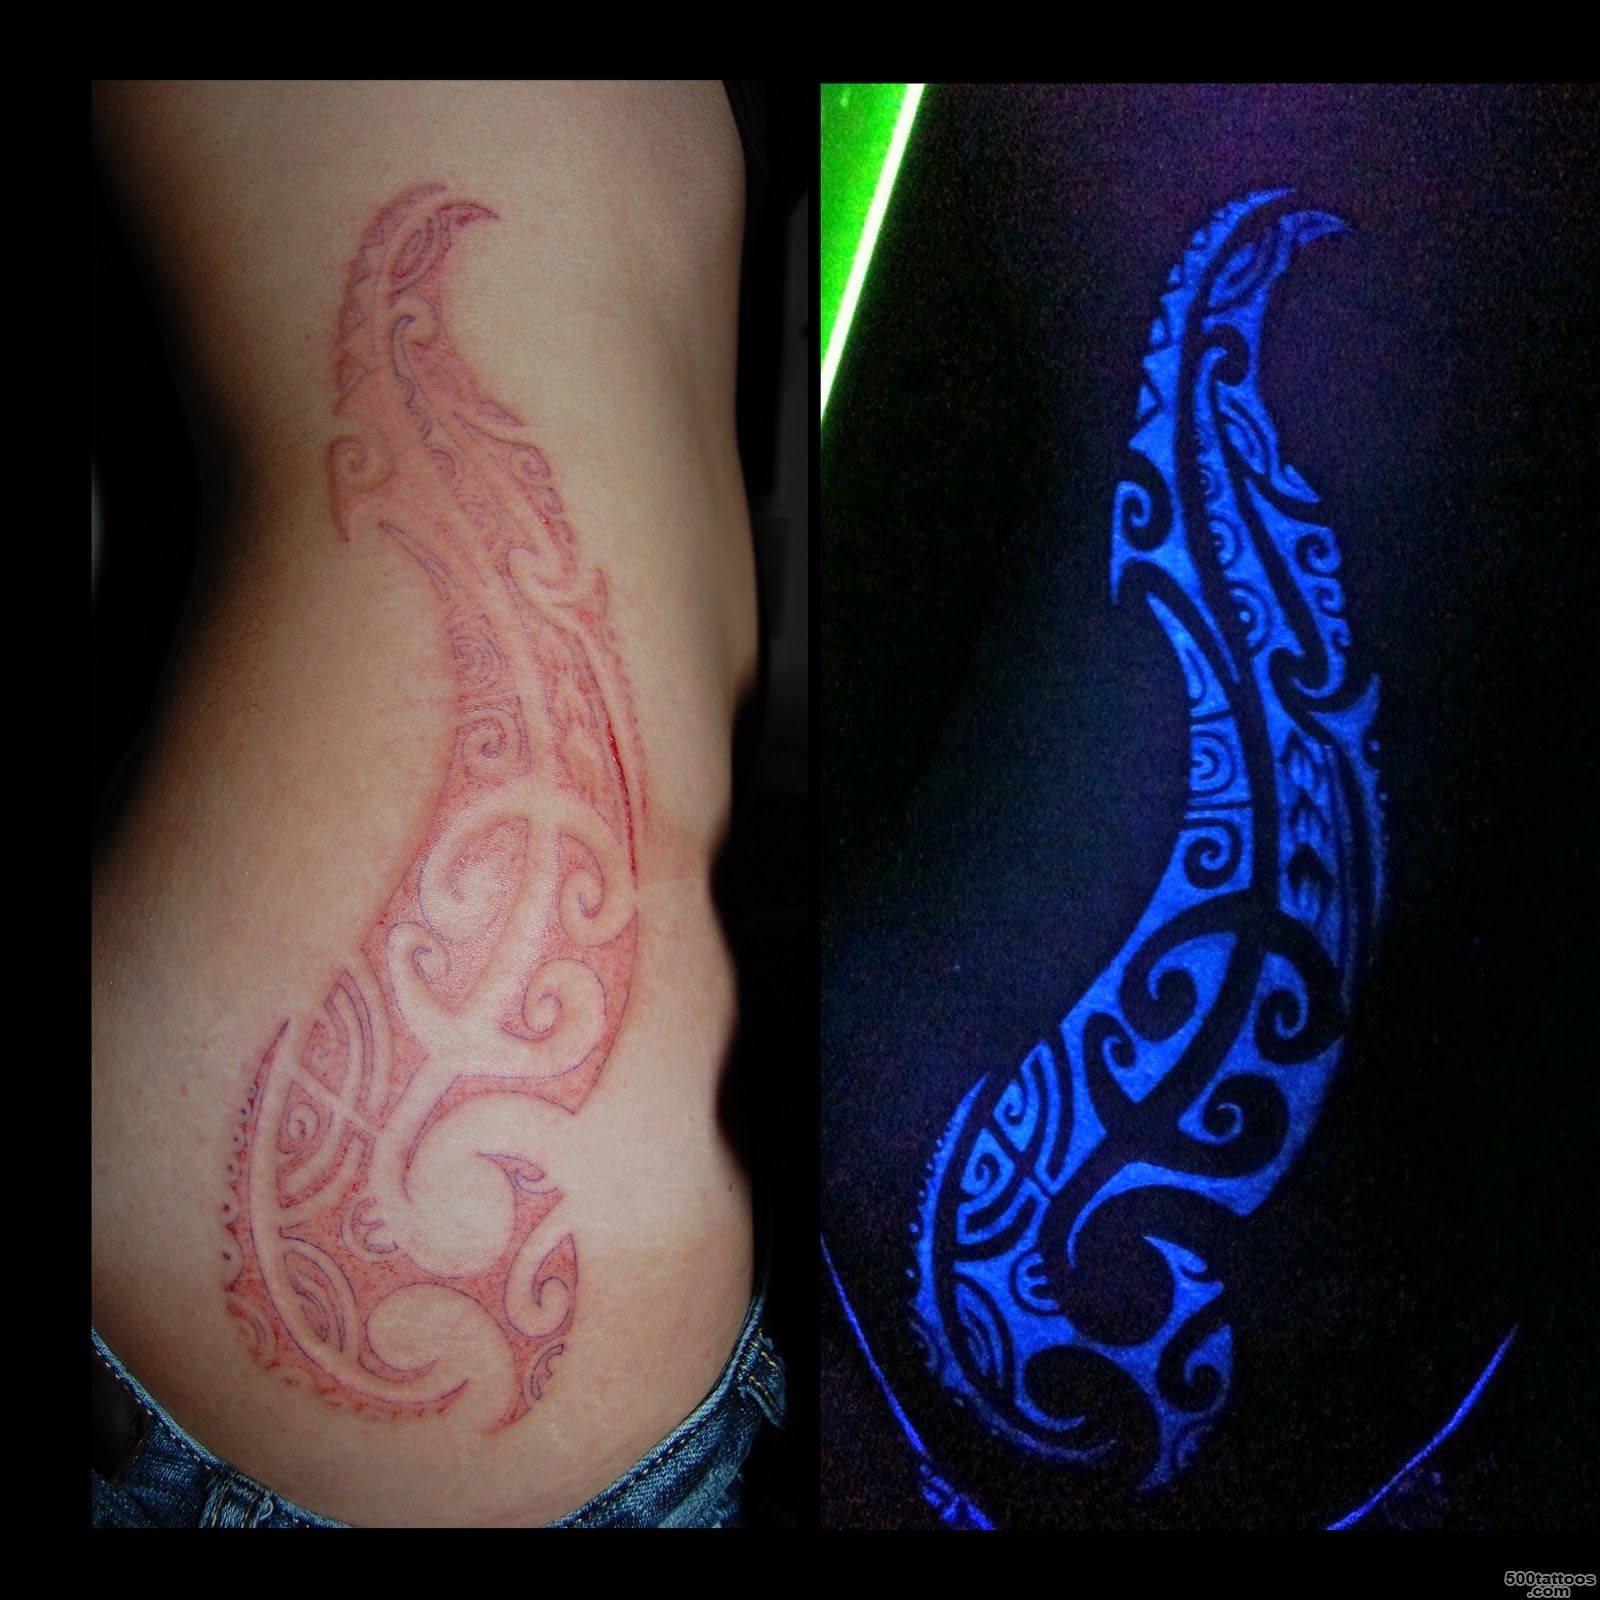 Tattoo Style of the Day Ultraviolet (UV) Tattoos  New 2 Tats_22